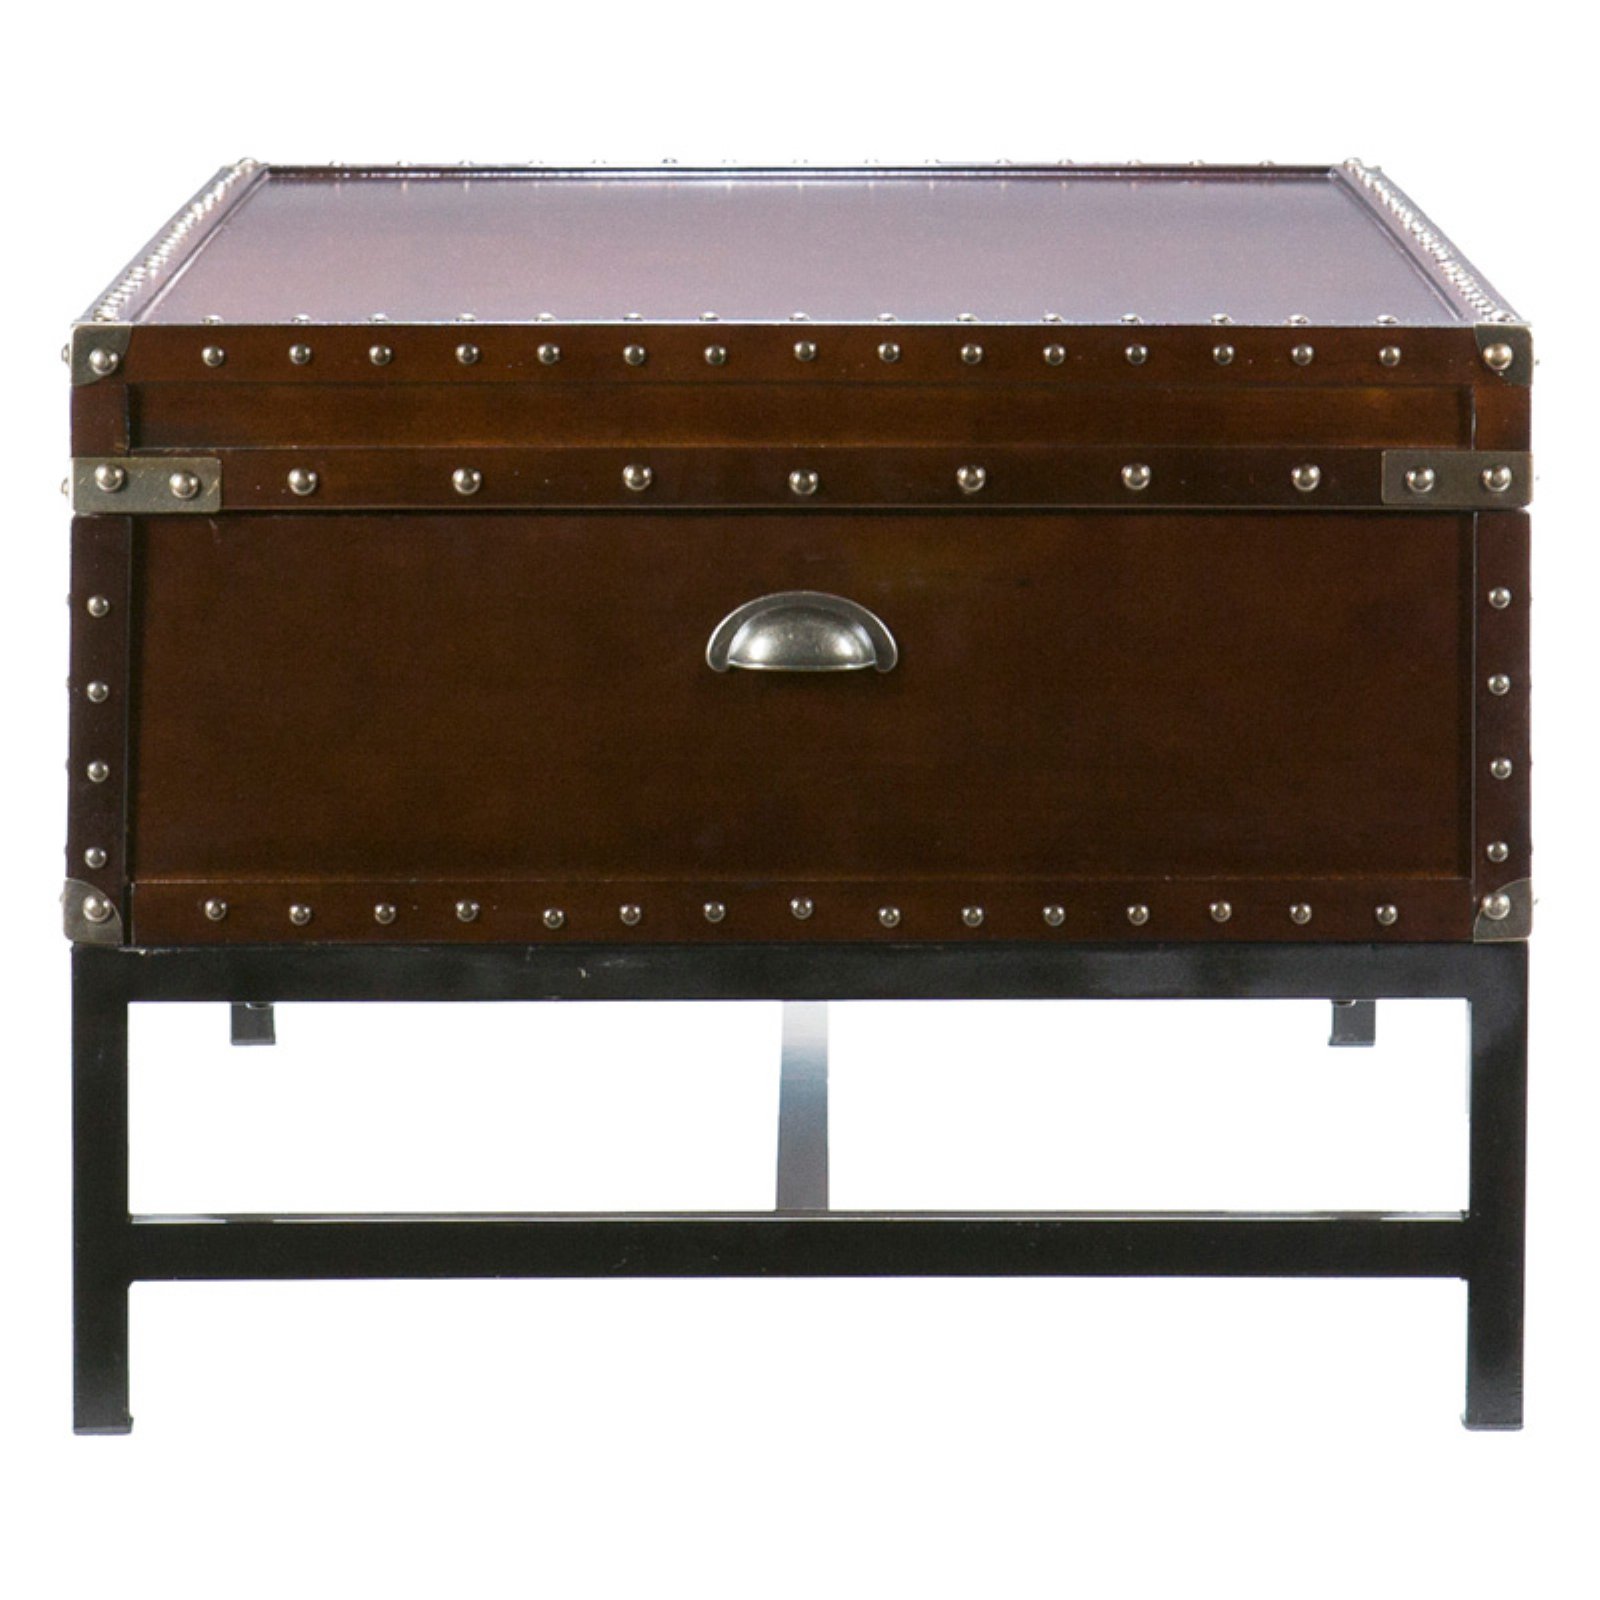 SEI Furniture Voyager Storage Coffee Table in Espresso - image 3 of 5